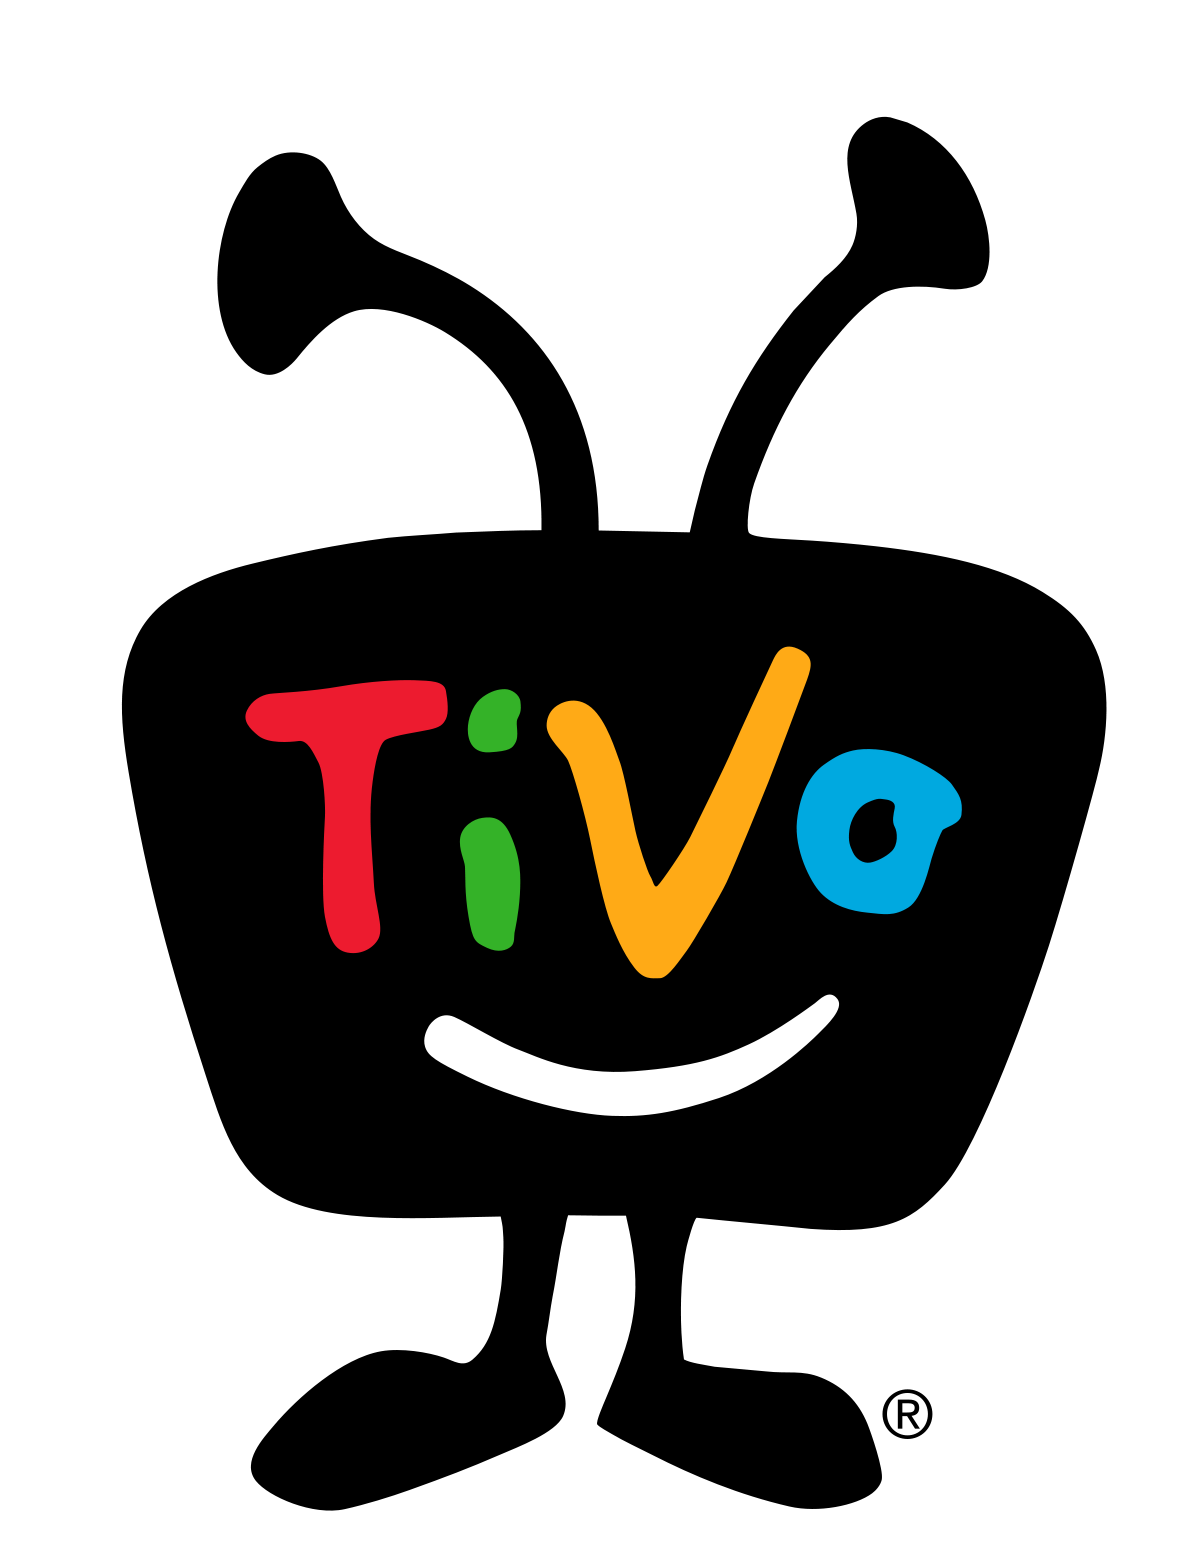 Origins of the “TiVo” moniker